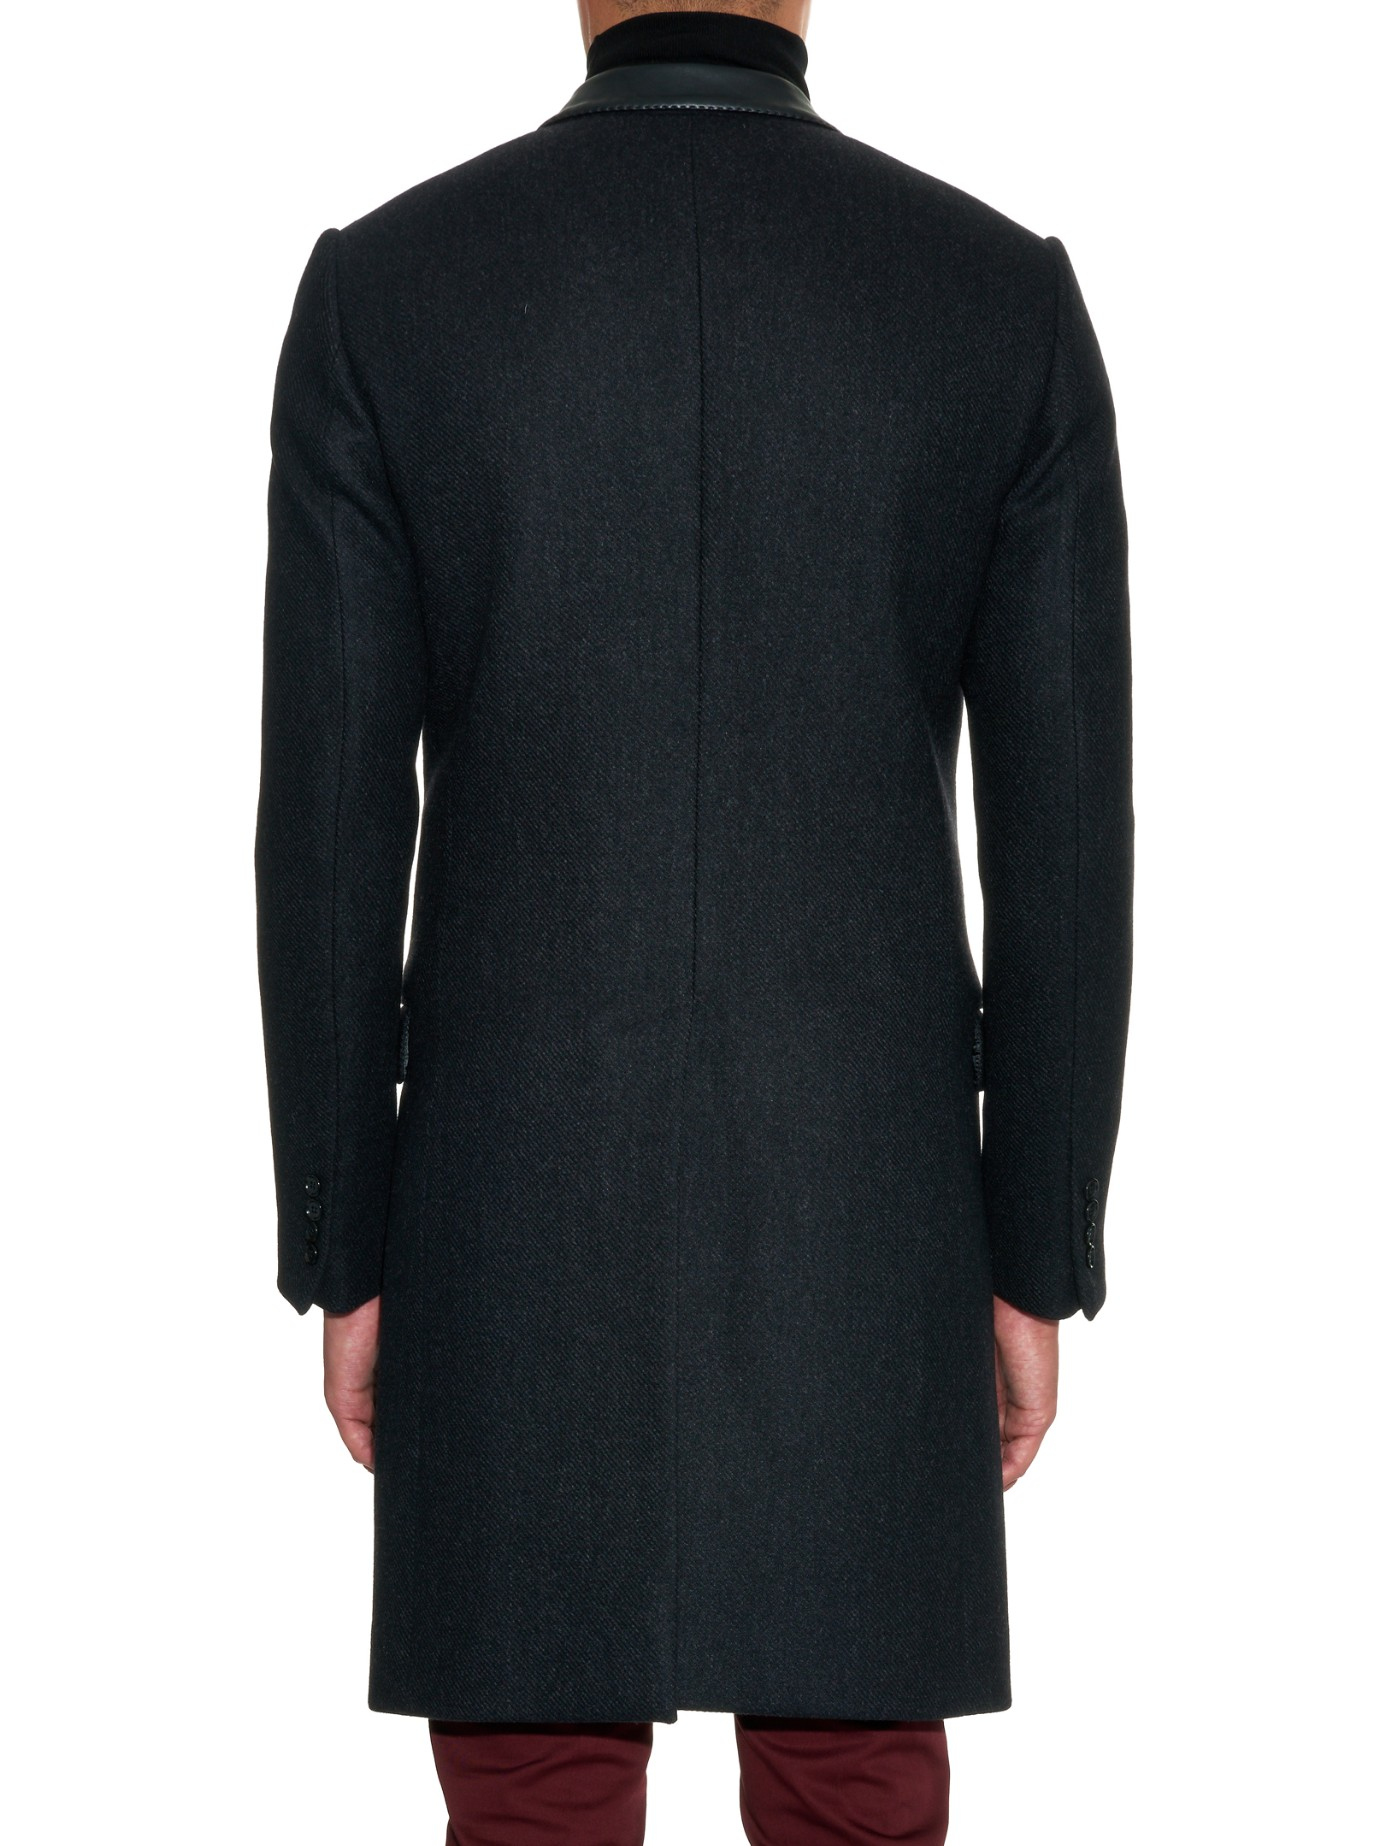 Lanvin Leather-collar Wool Overcoat in Black for Men - Lyst